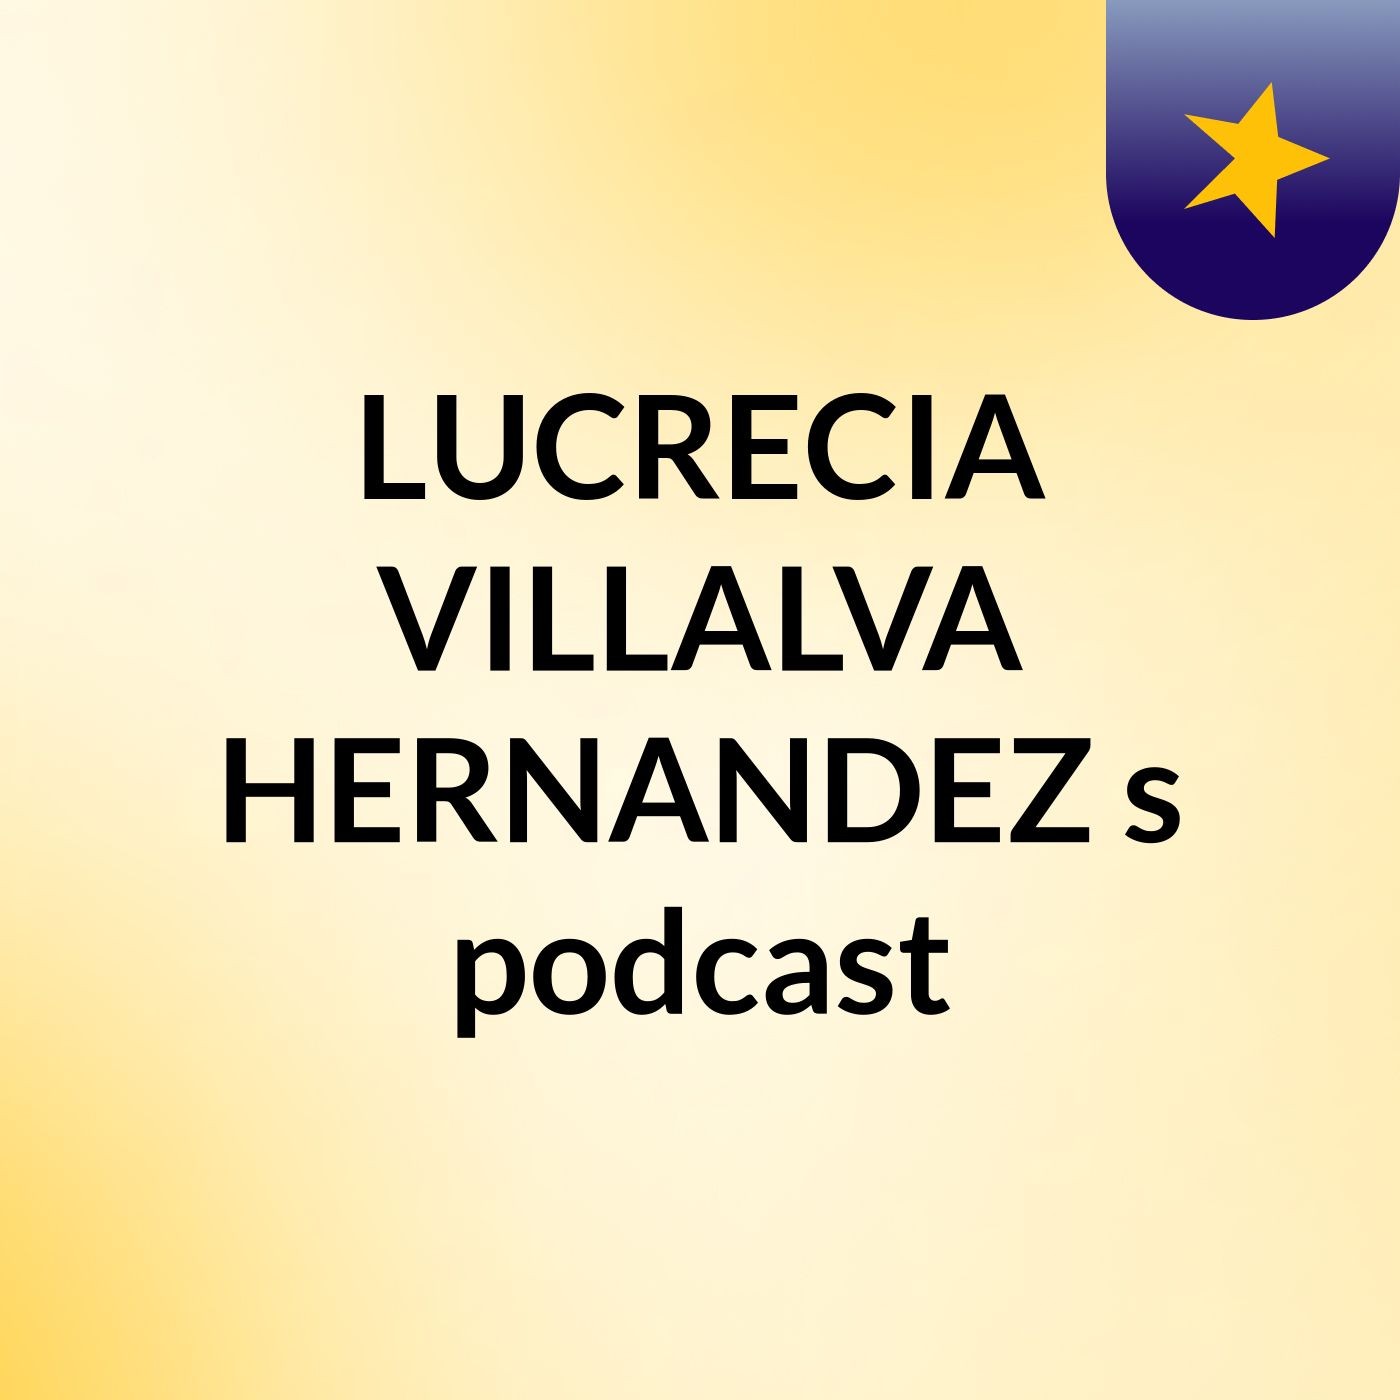 LUCRECIA VILLALVA HERNANDEZ's podcast